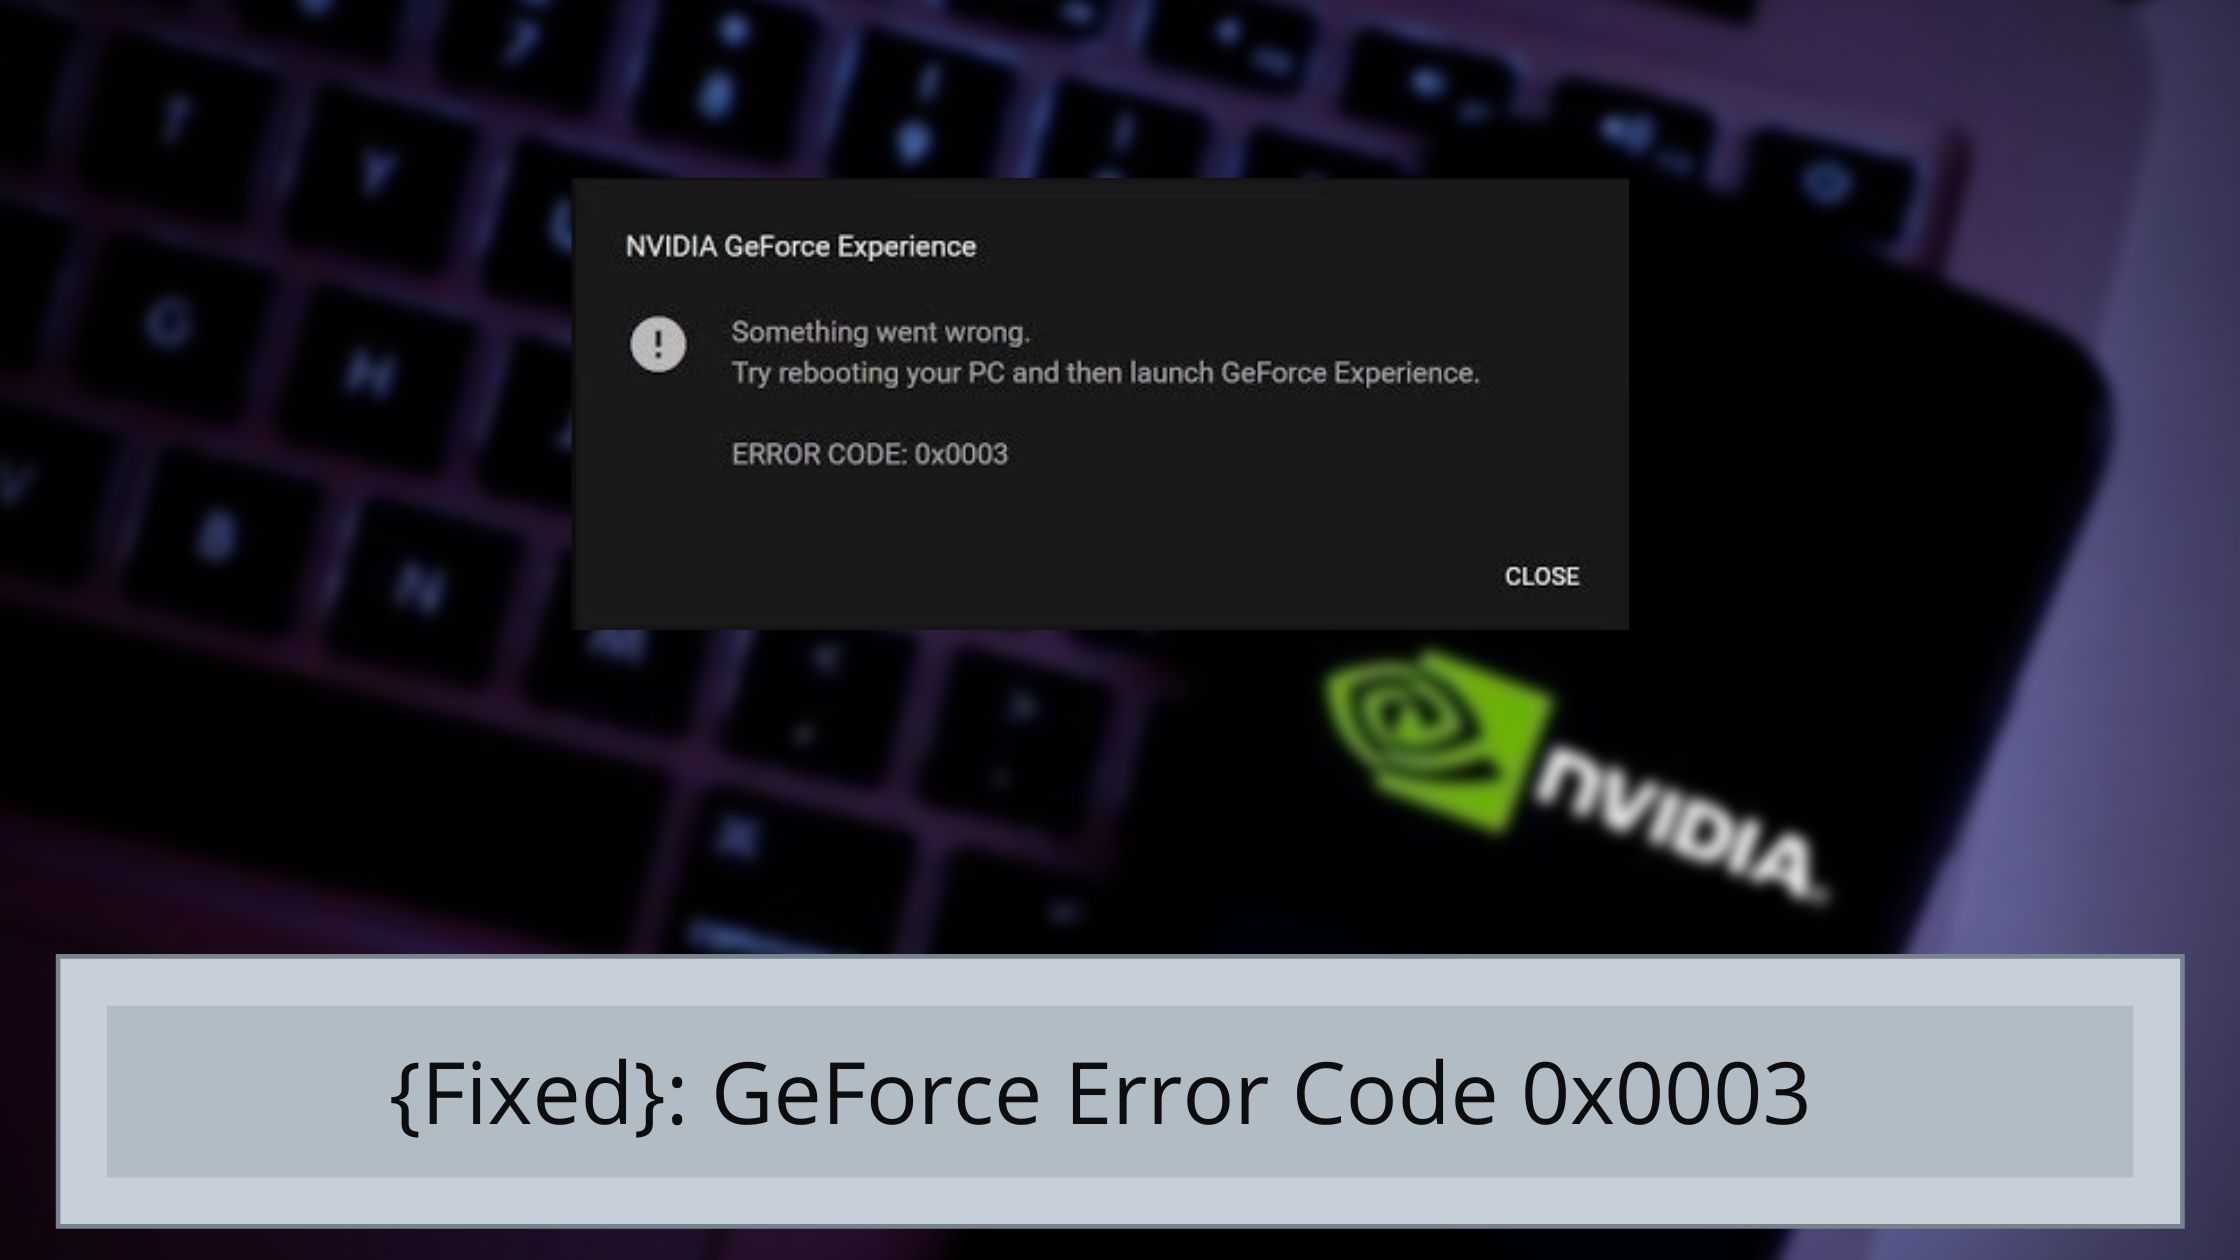 geforce experience error code 0x0003